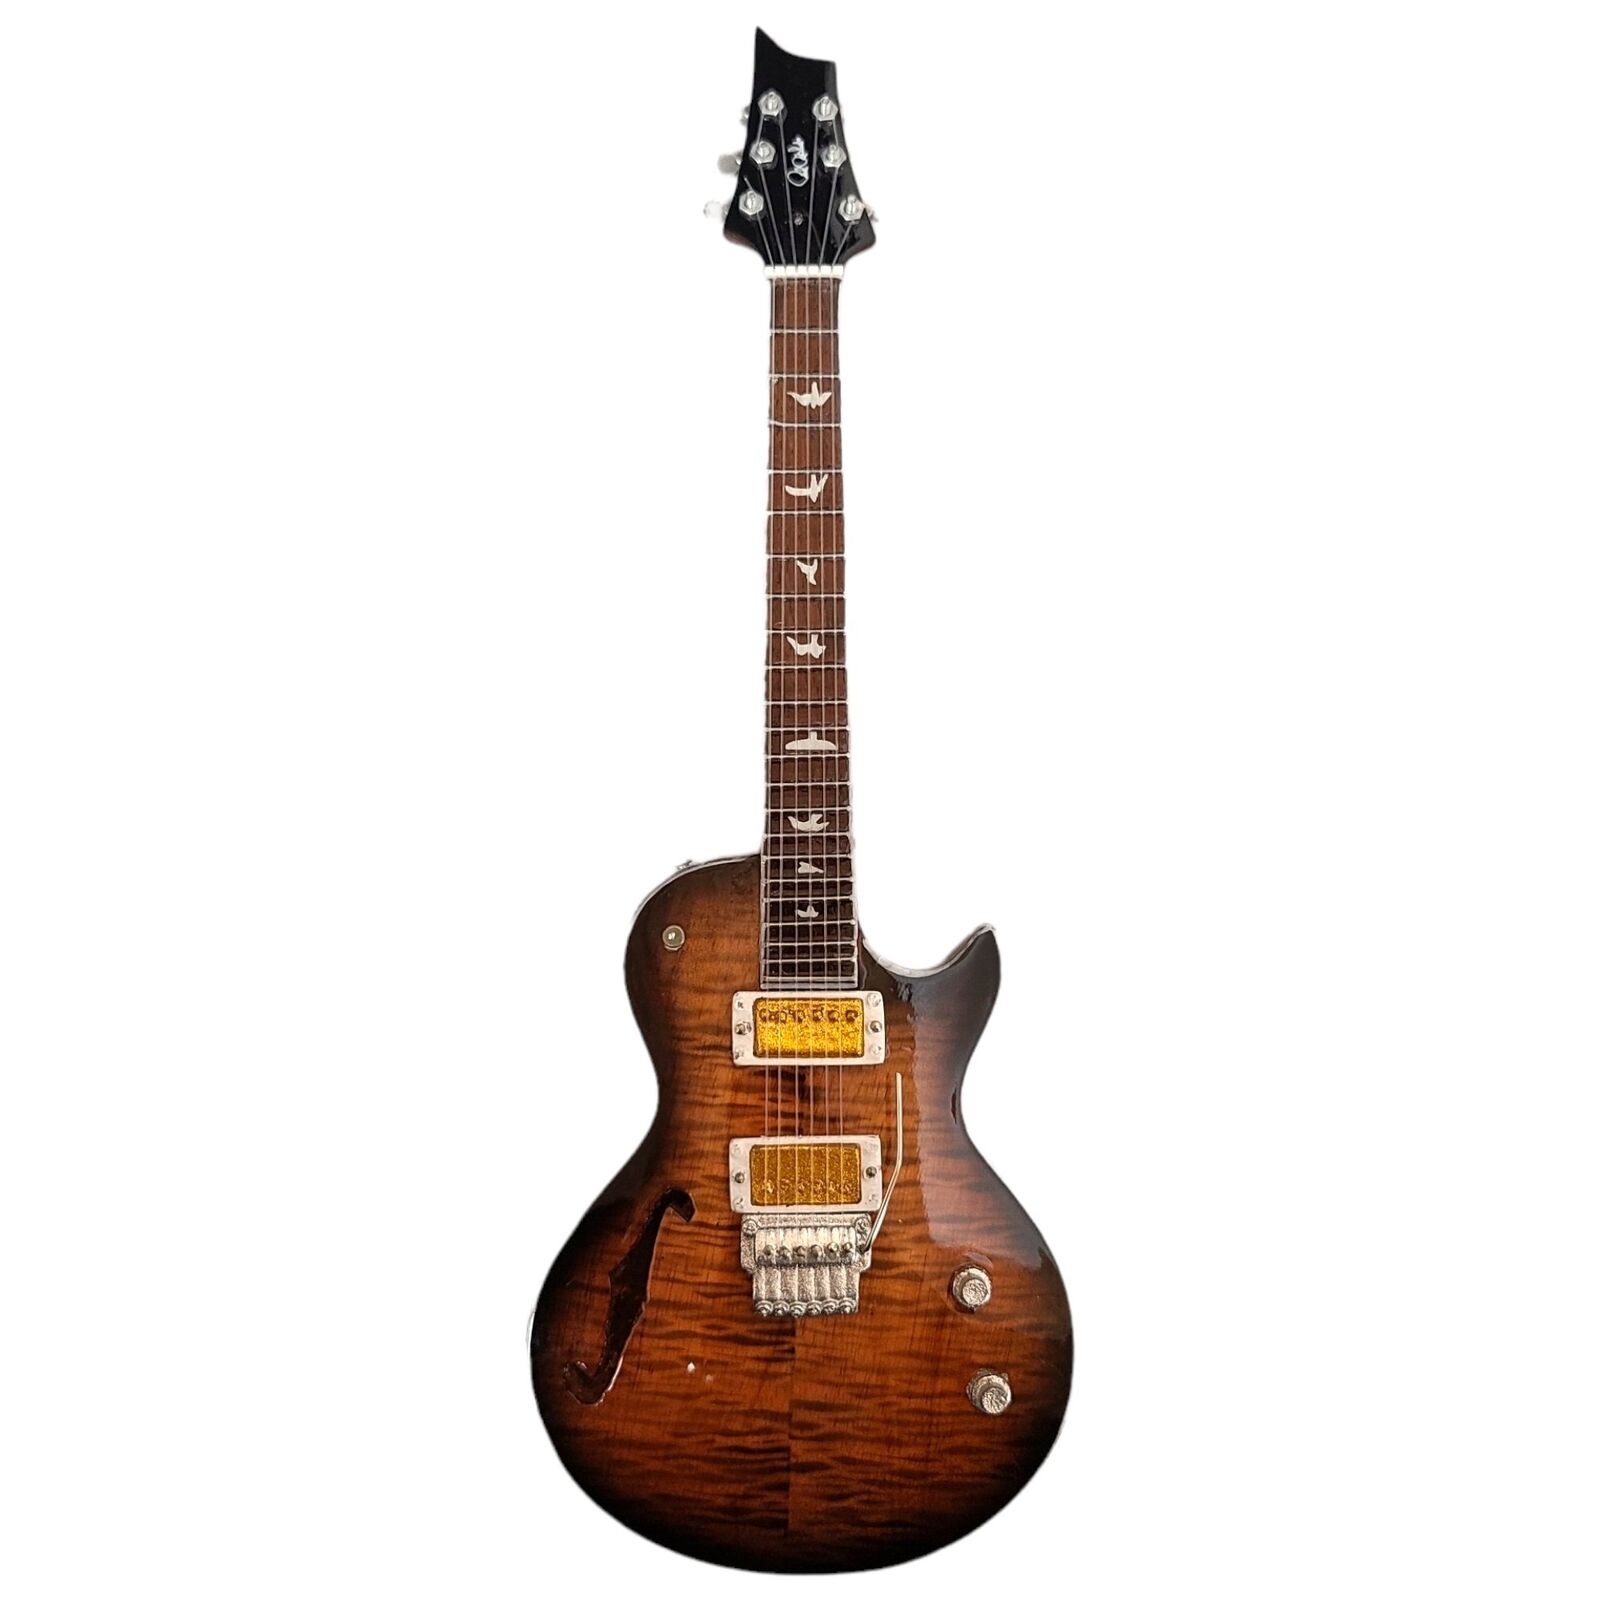 Axe Heaven Mini Guitar Replica PRS Neal Schon Charcoal Burst NS014 1:4 Scale